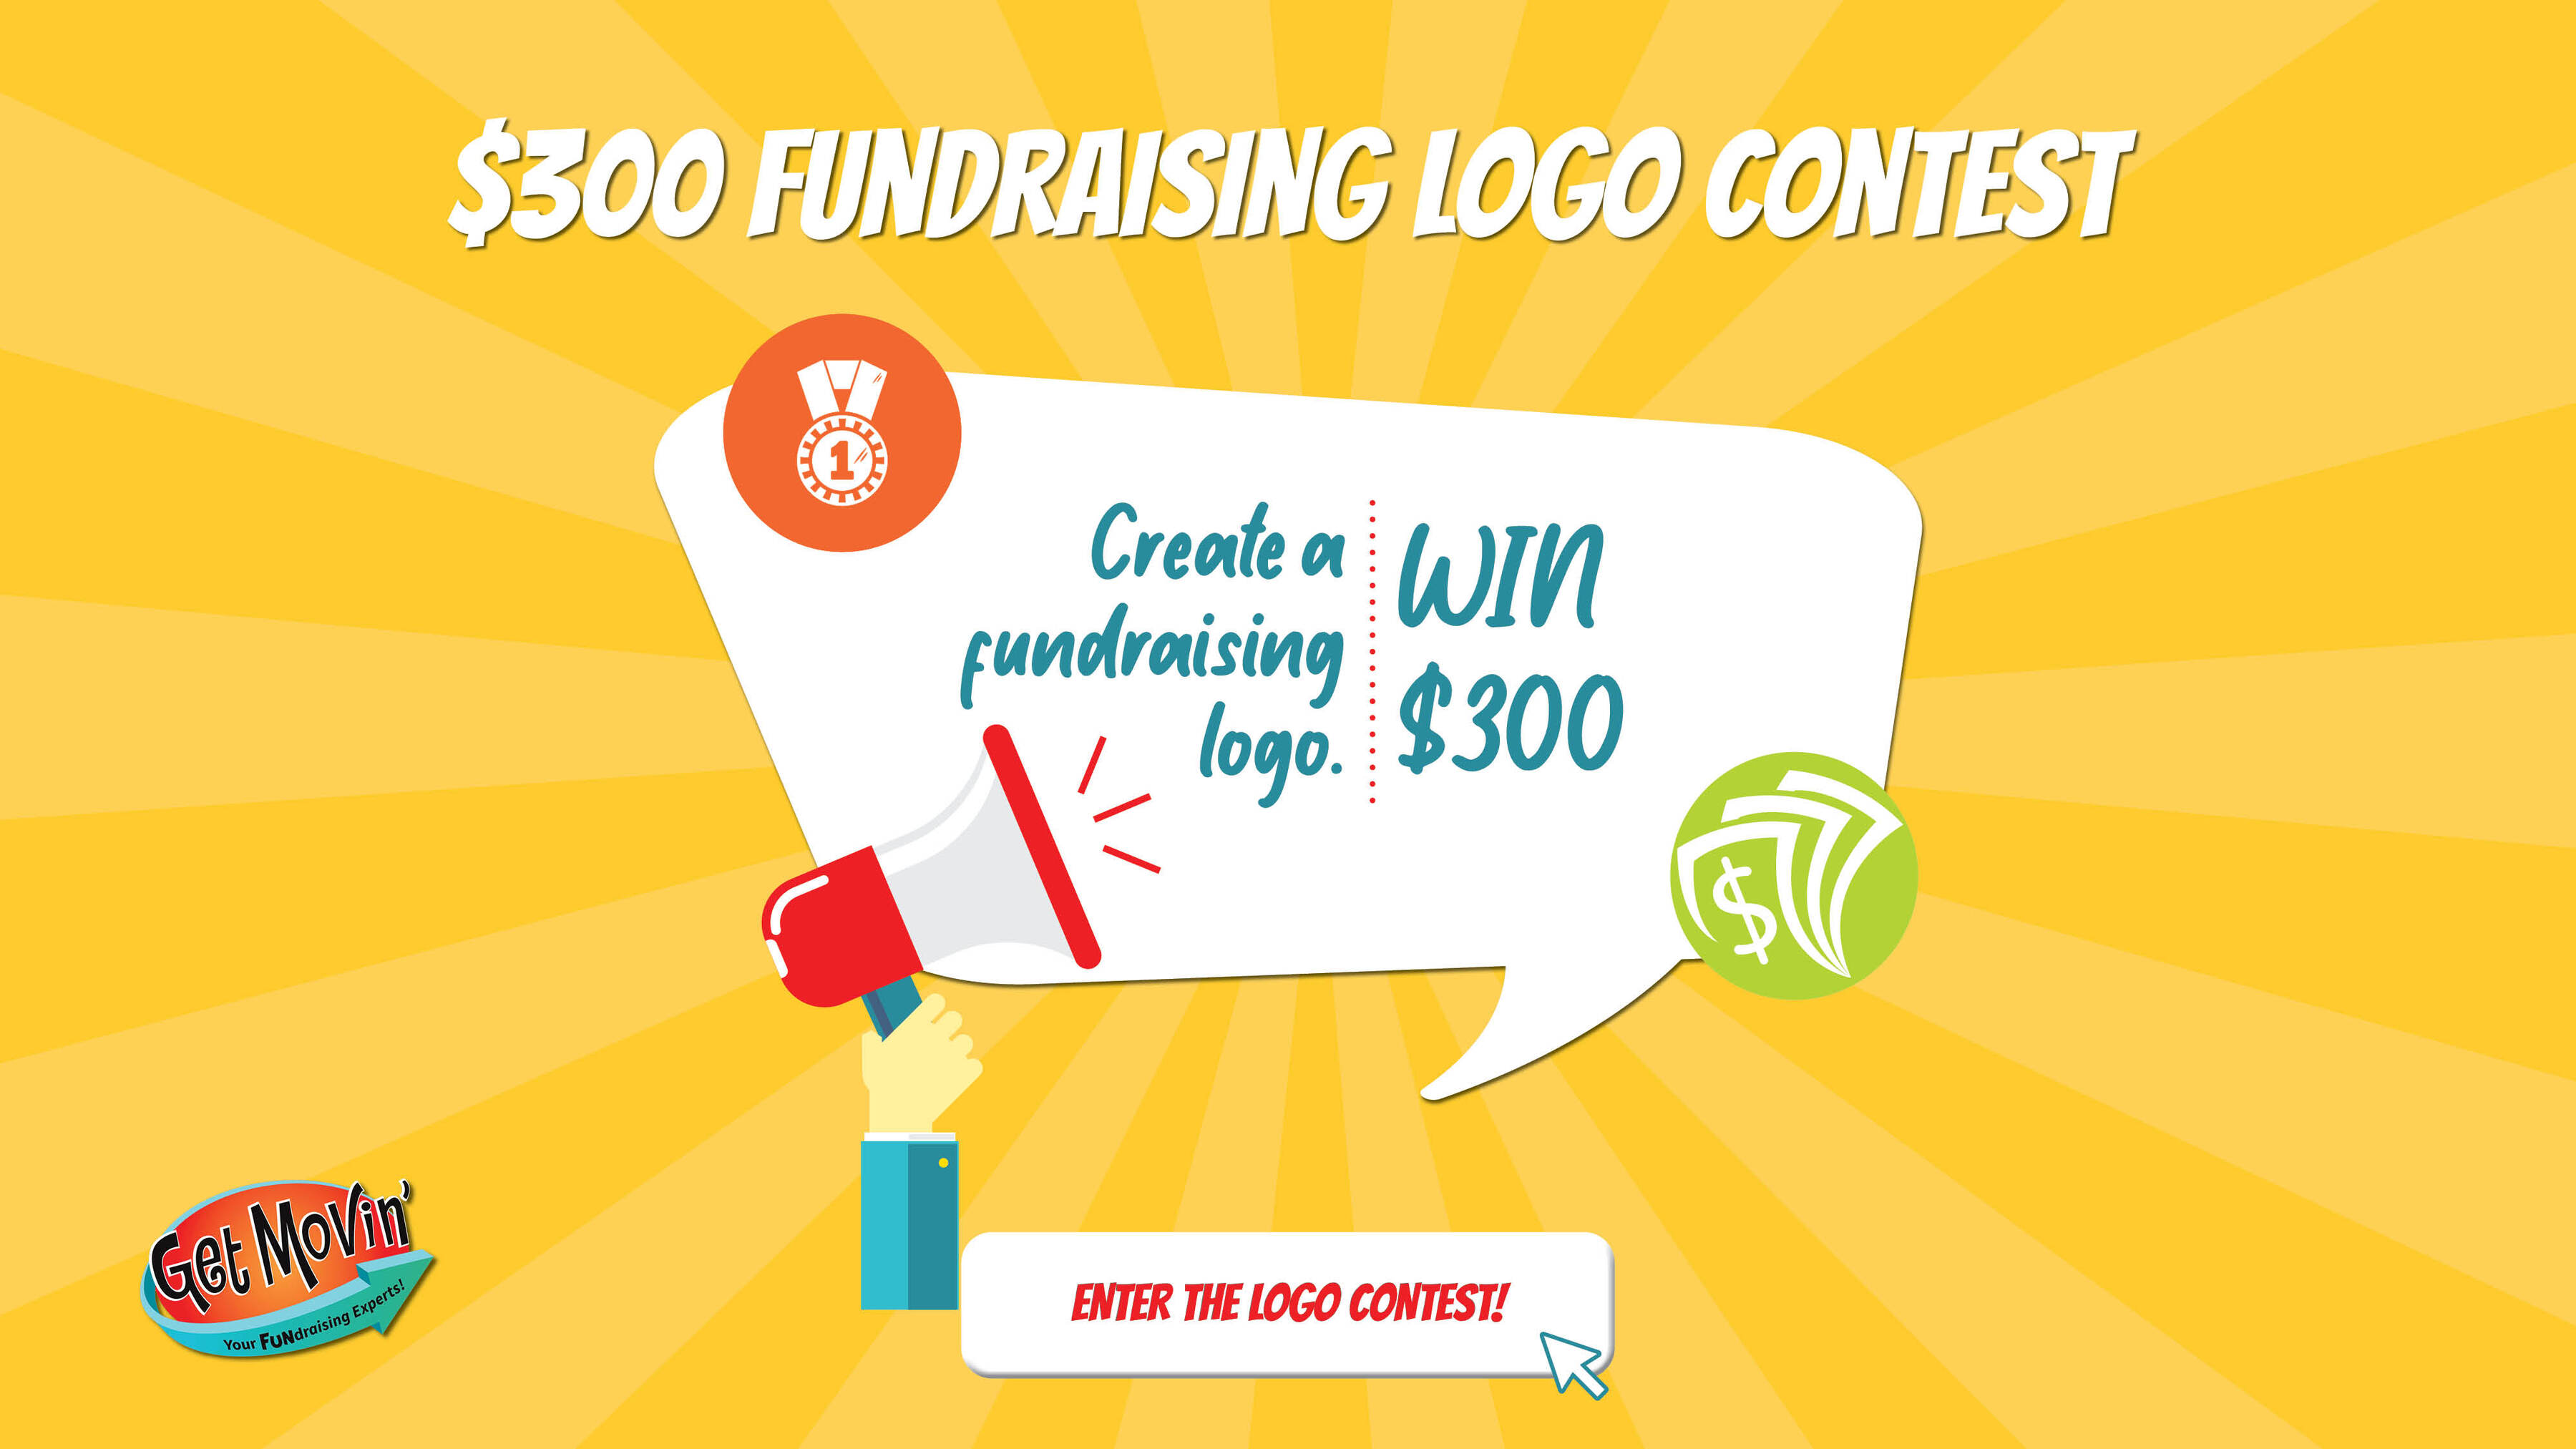 Logo Contest Webpage Banner.jpg